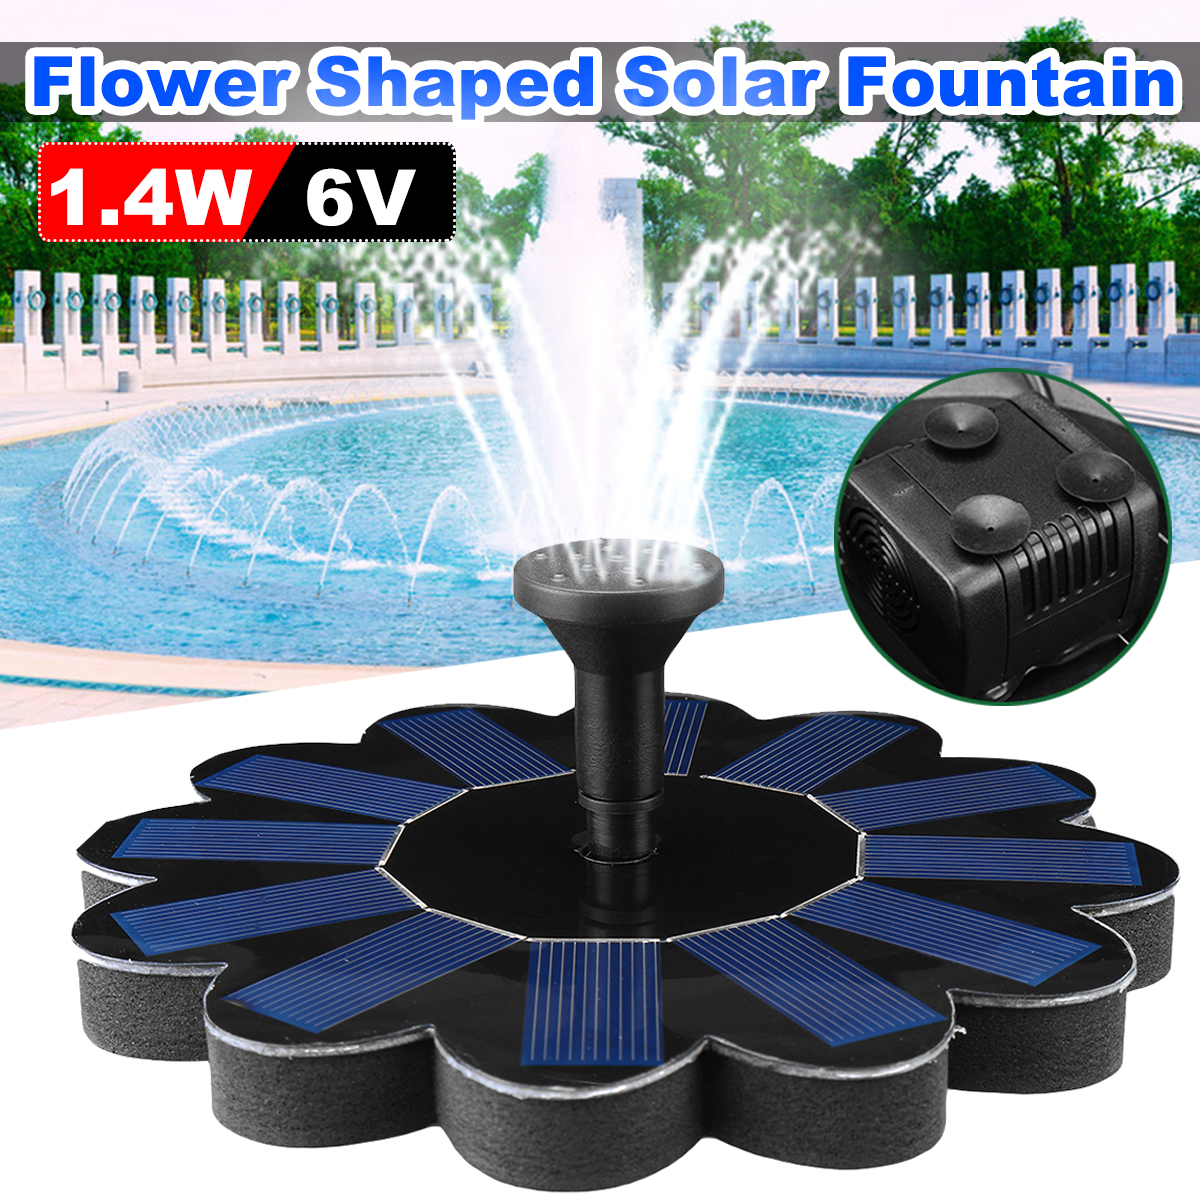 6V-14W-Flower-Shaped-Solar-Powered-Fountain-Garden-Pond-Pool-Decor-Water-Fountain-Pump-1720810-1